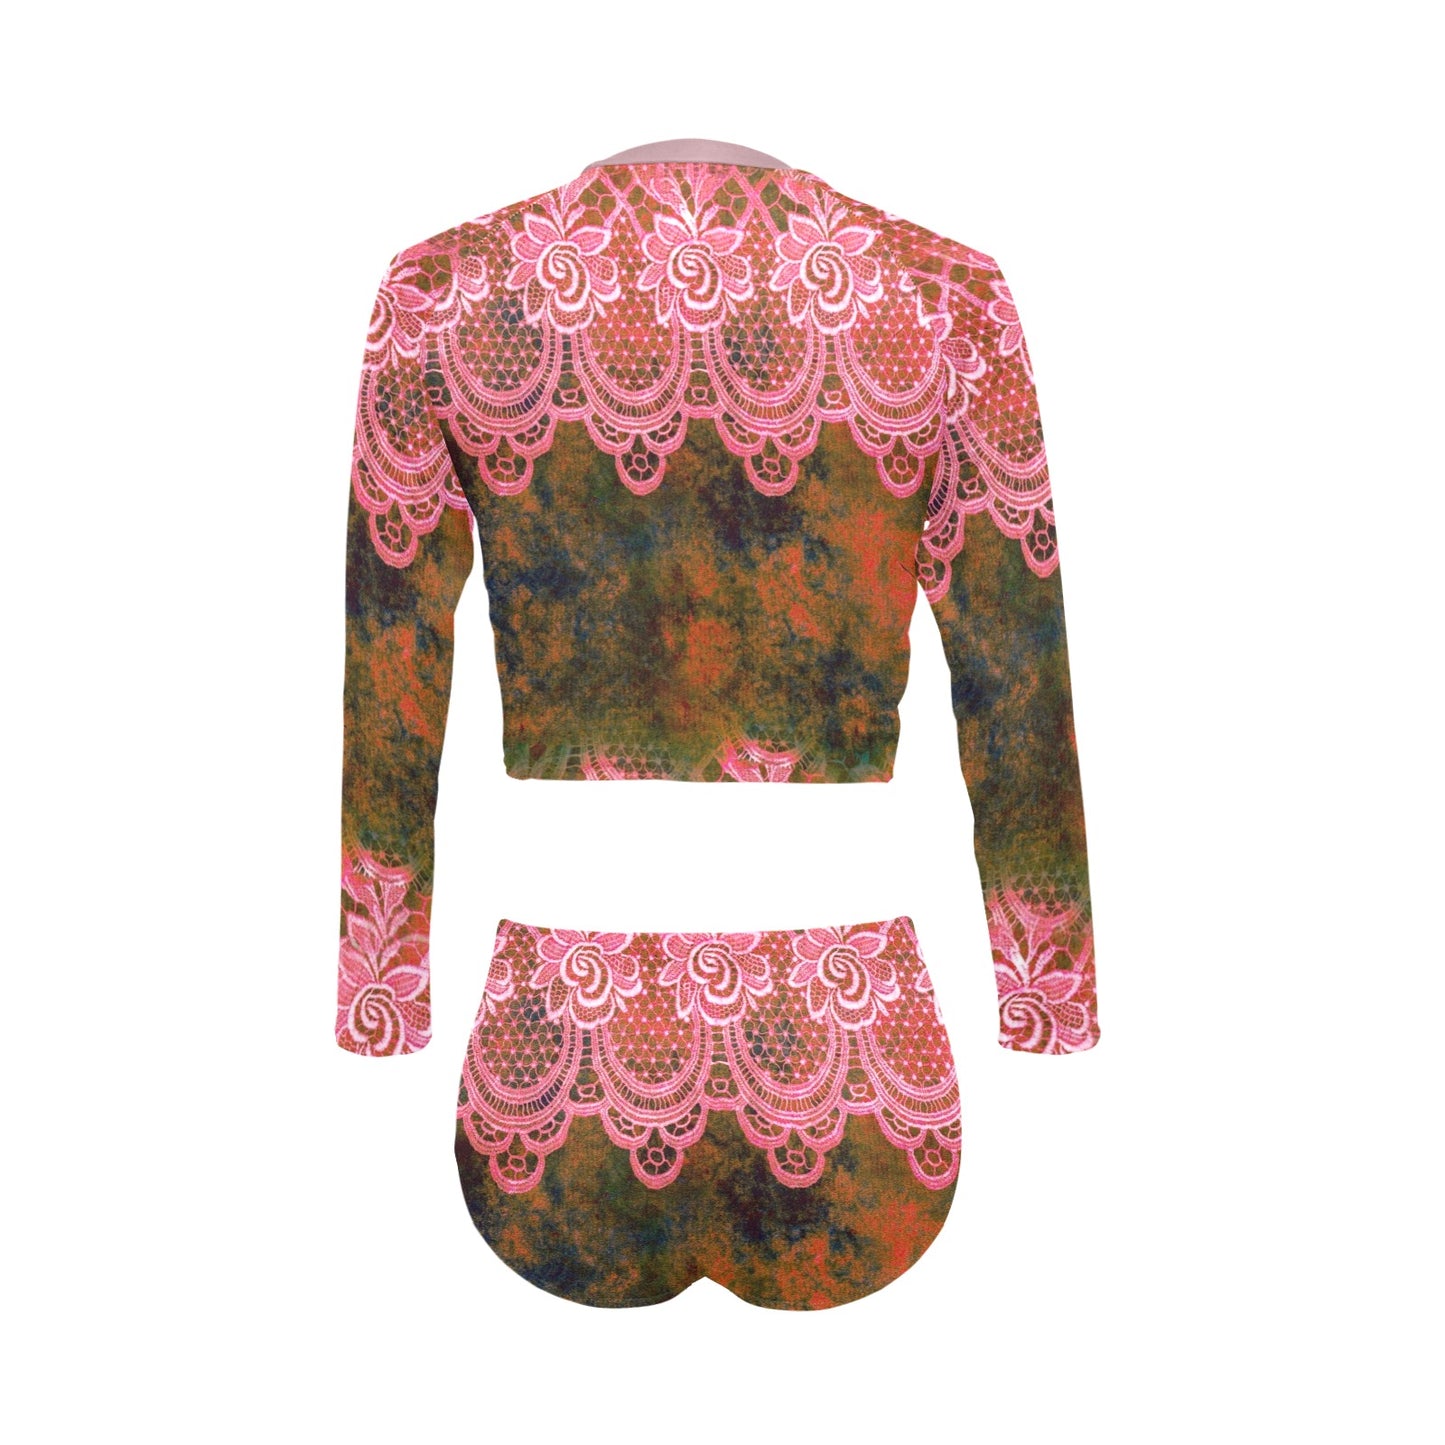 Victorian printed lace, long sleeve 2pc swimsuit, beachwear, design 32 Long Sleeve Bikini Set (Model S27)